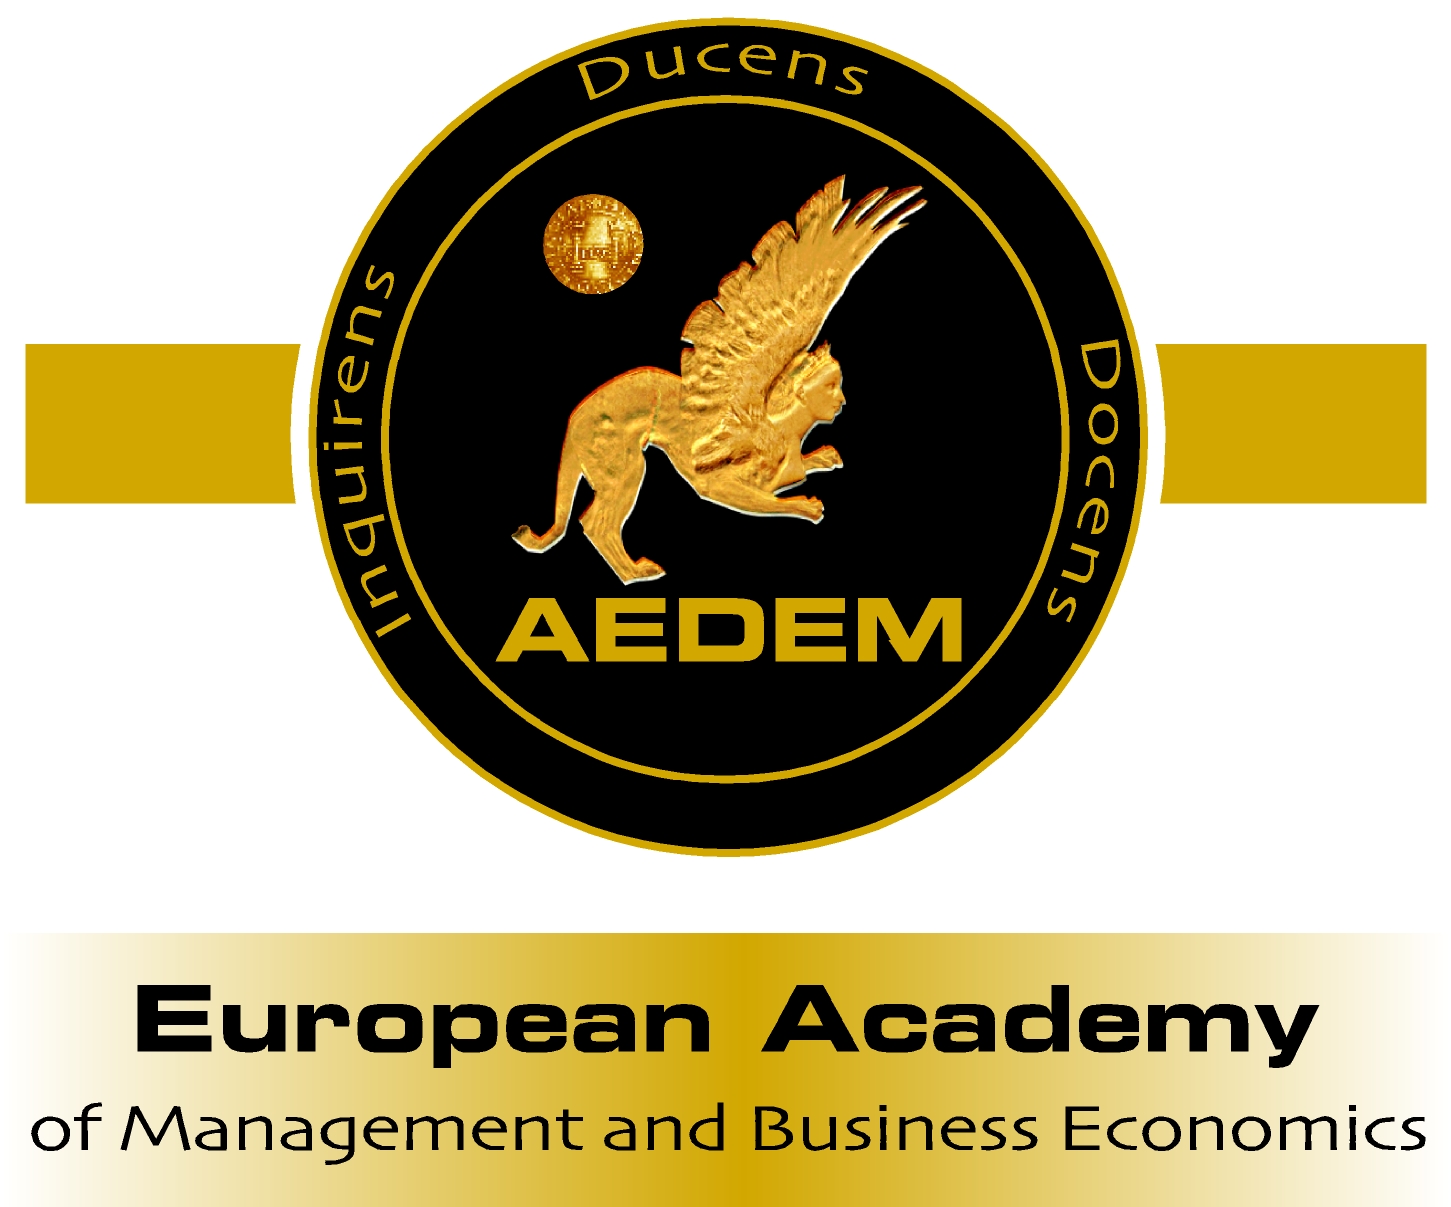 XXIV Congreso Internacional de AEDEM (2015)